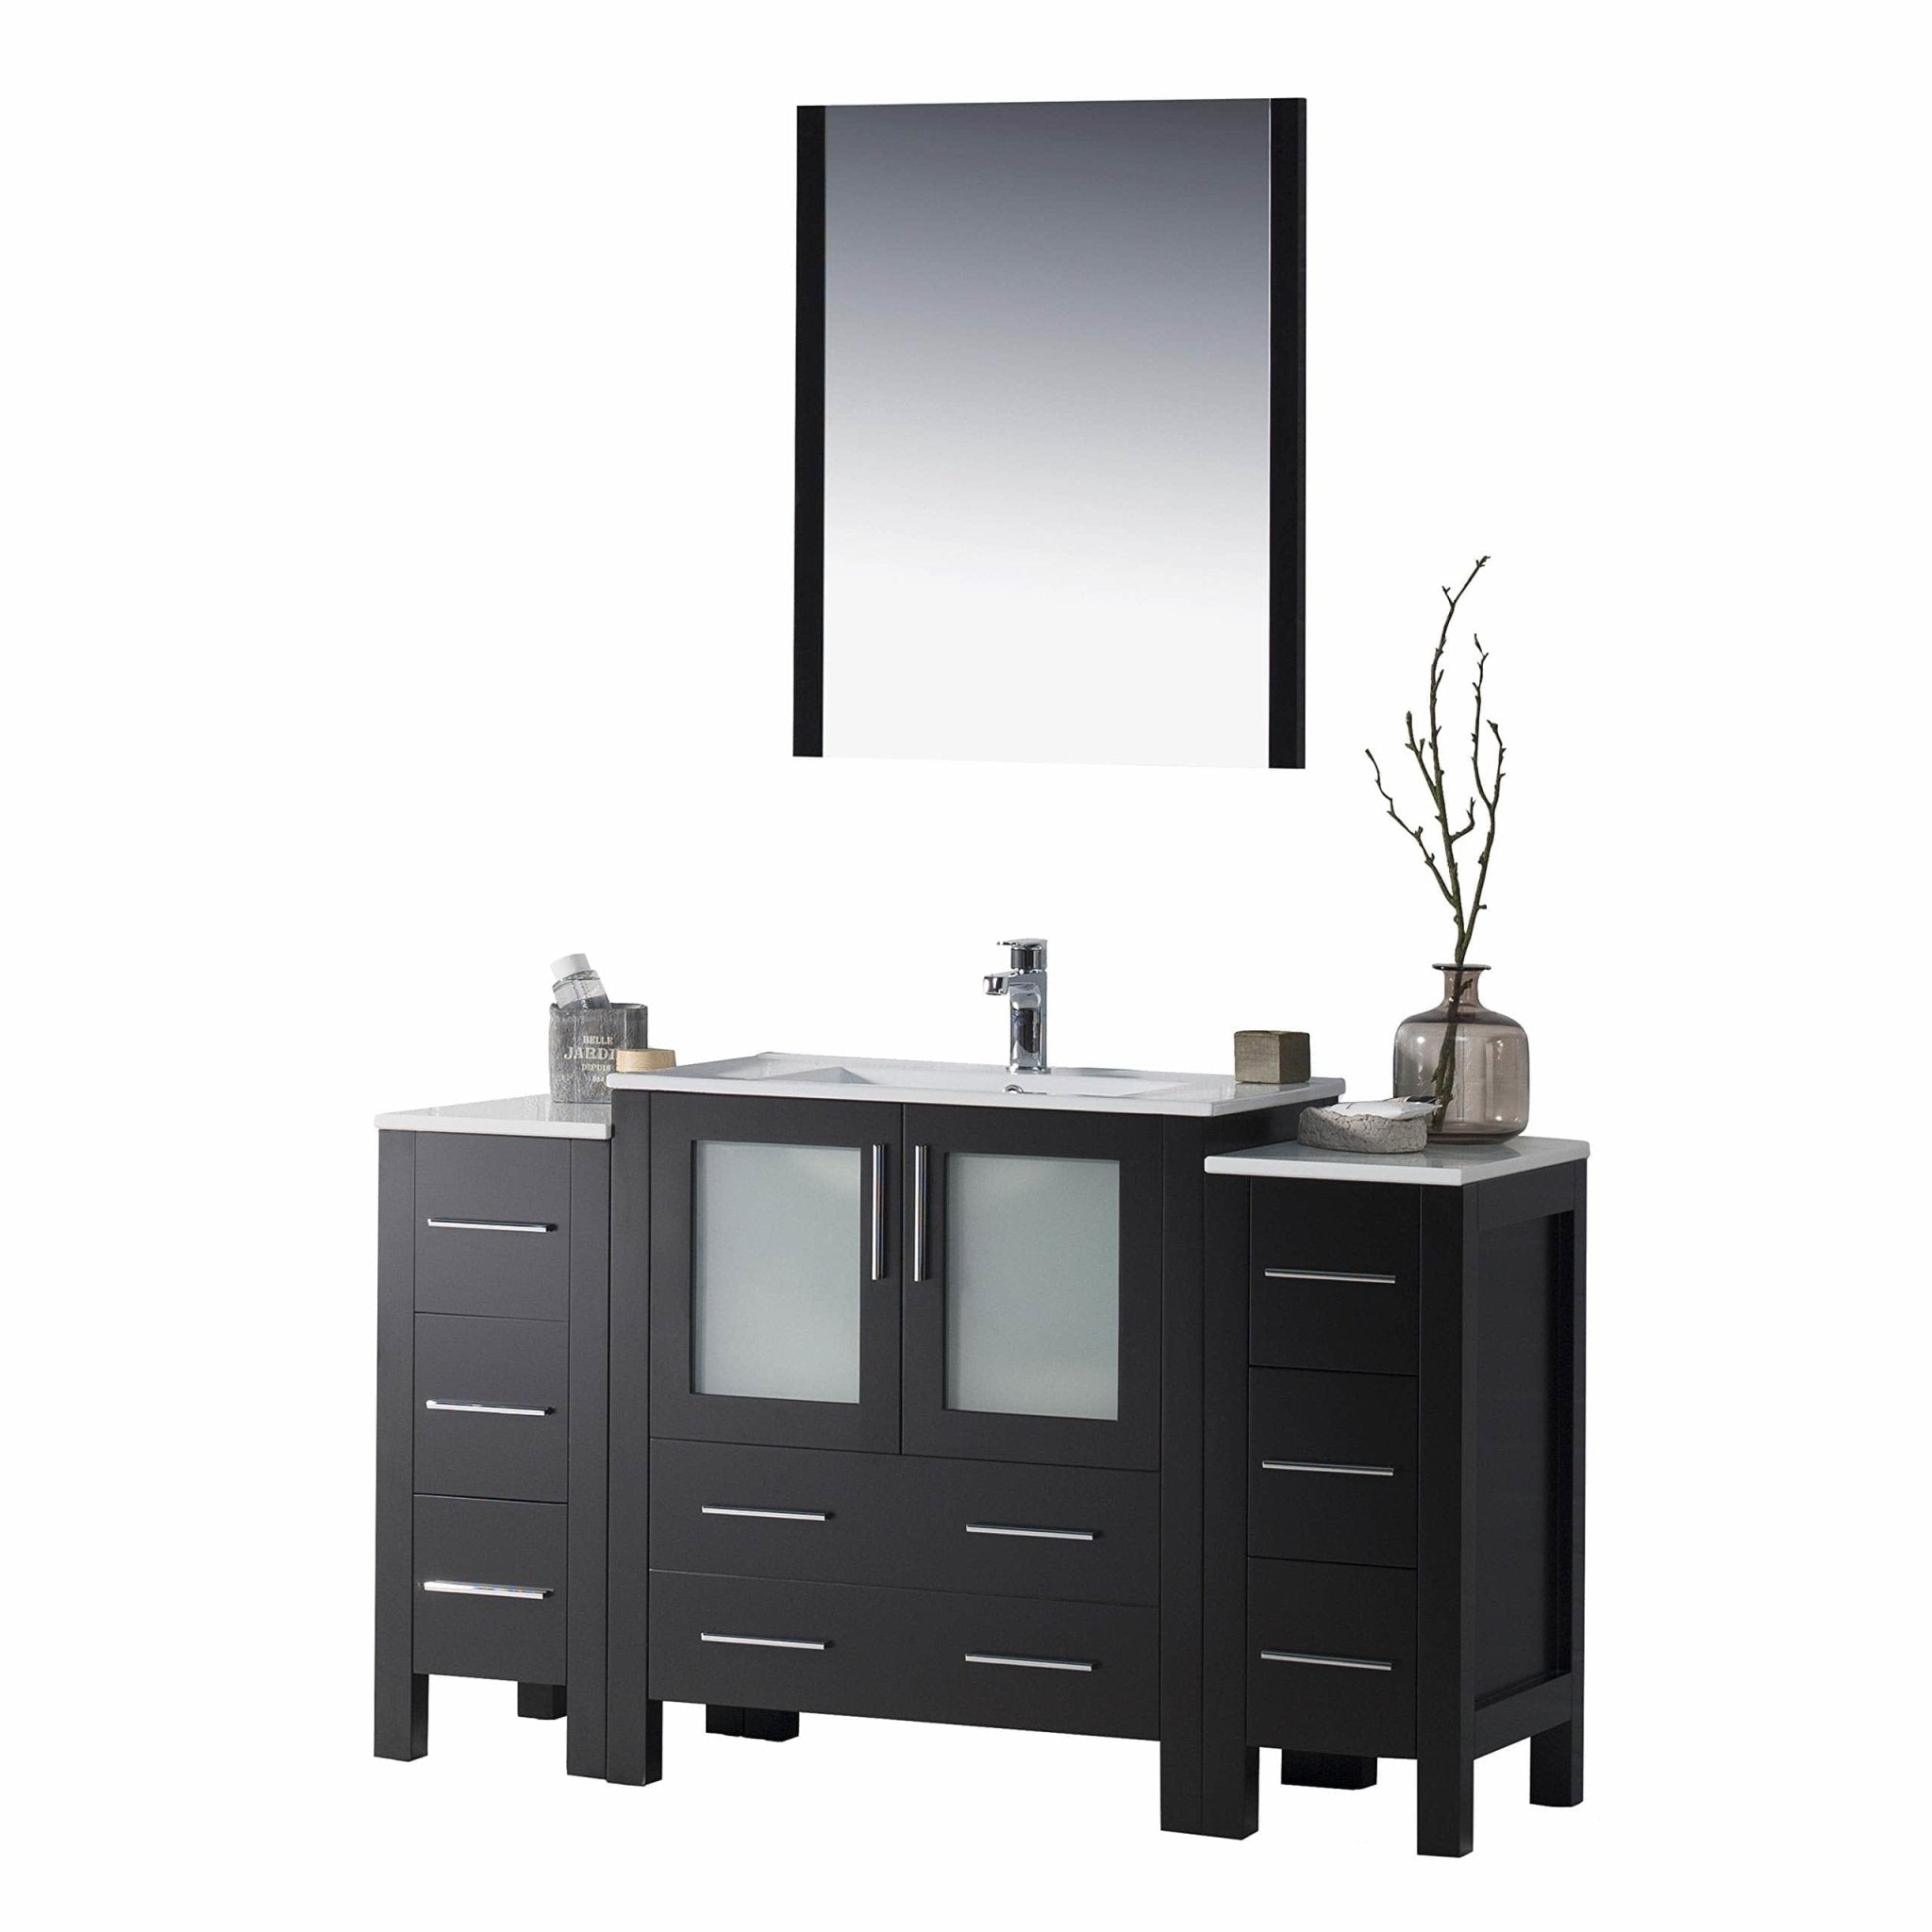 Sydney - 54 Inch Vanity with Ceramic Sink & Mirror - Espresso - Molaix842708124899Sydney001 54 02 C M